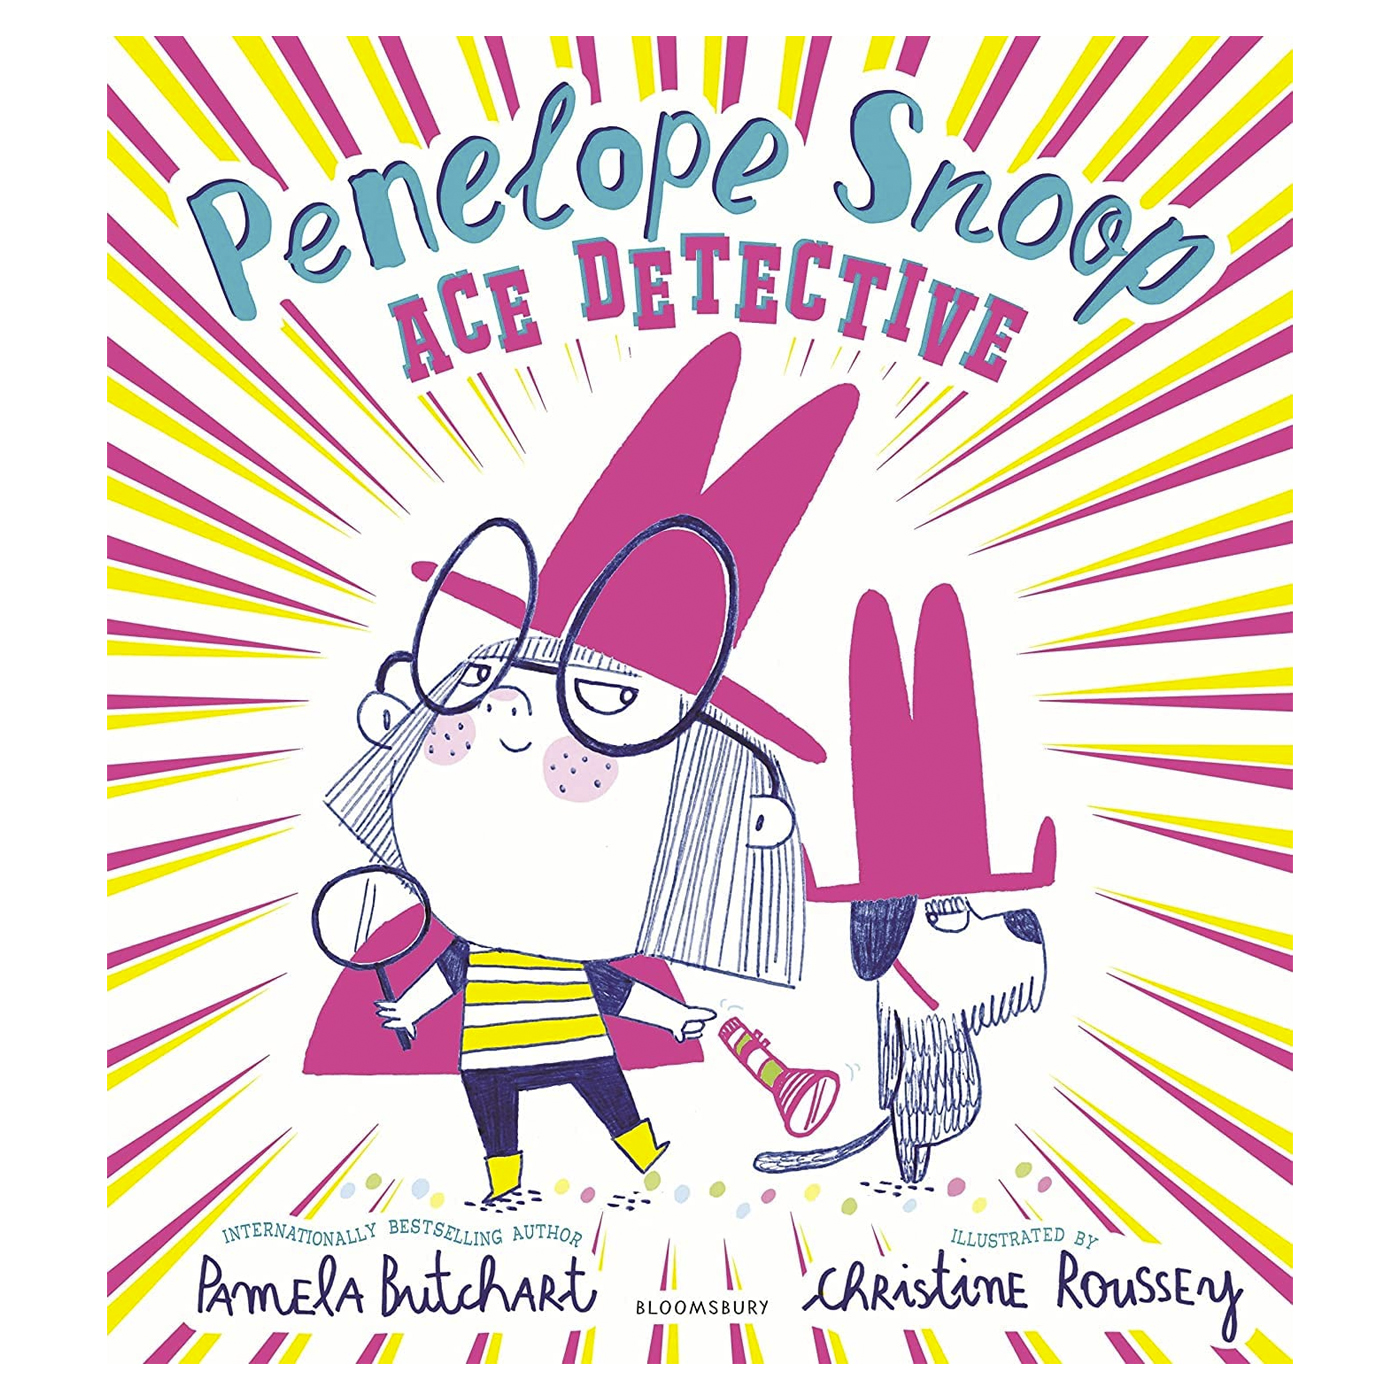  Penelope Snoop, Ace Detective